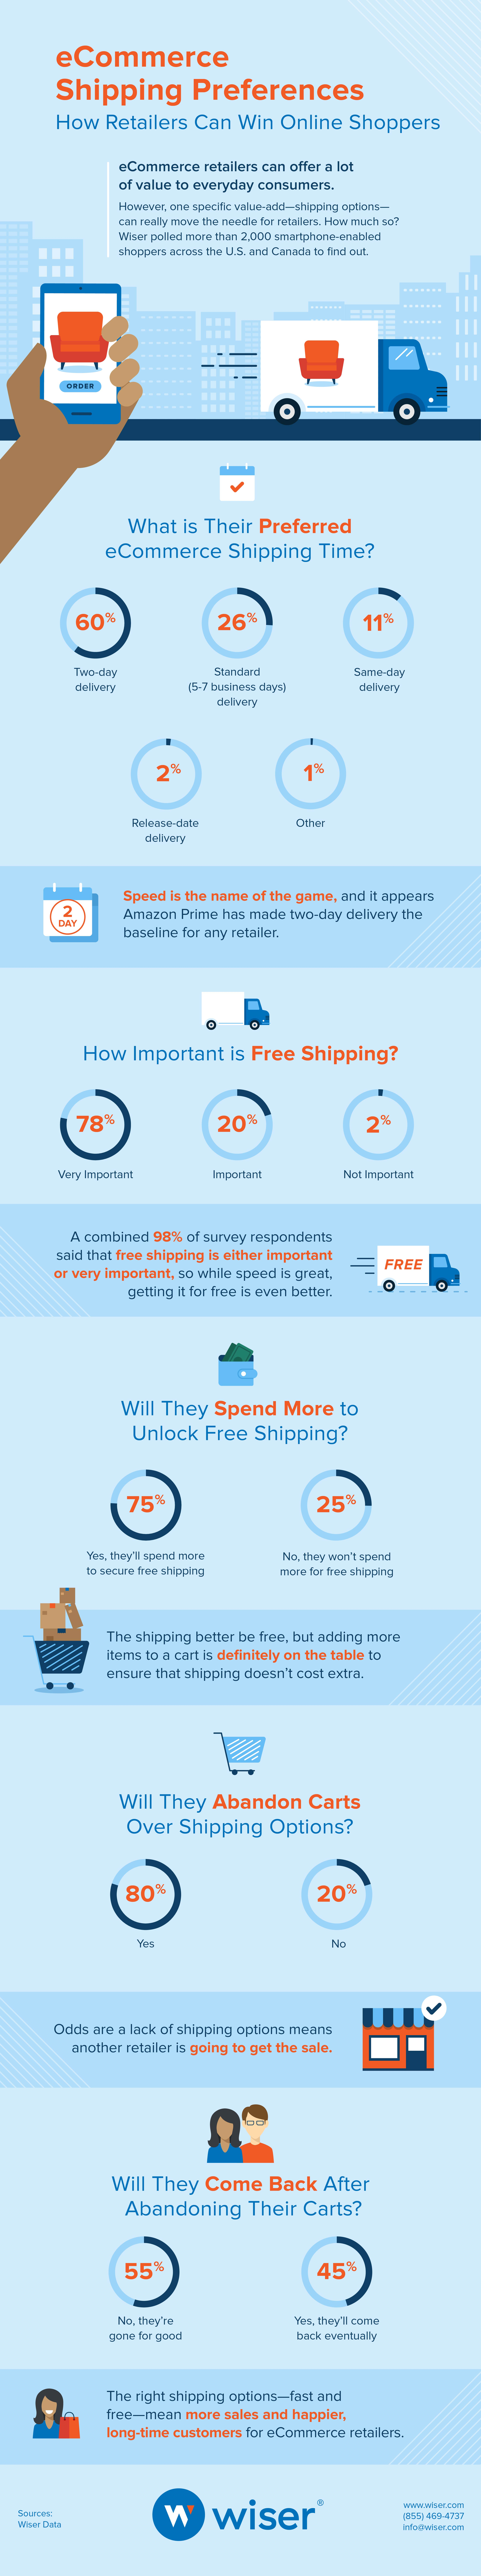 eCommerce Shipping Options